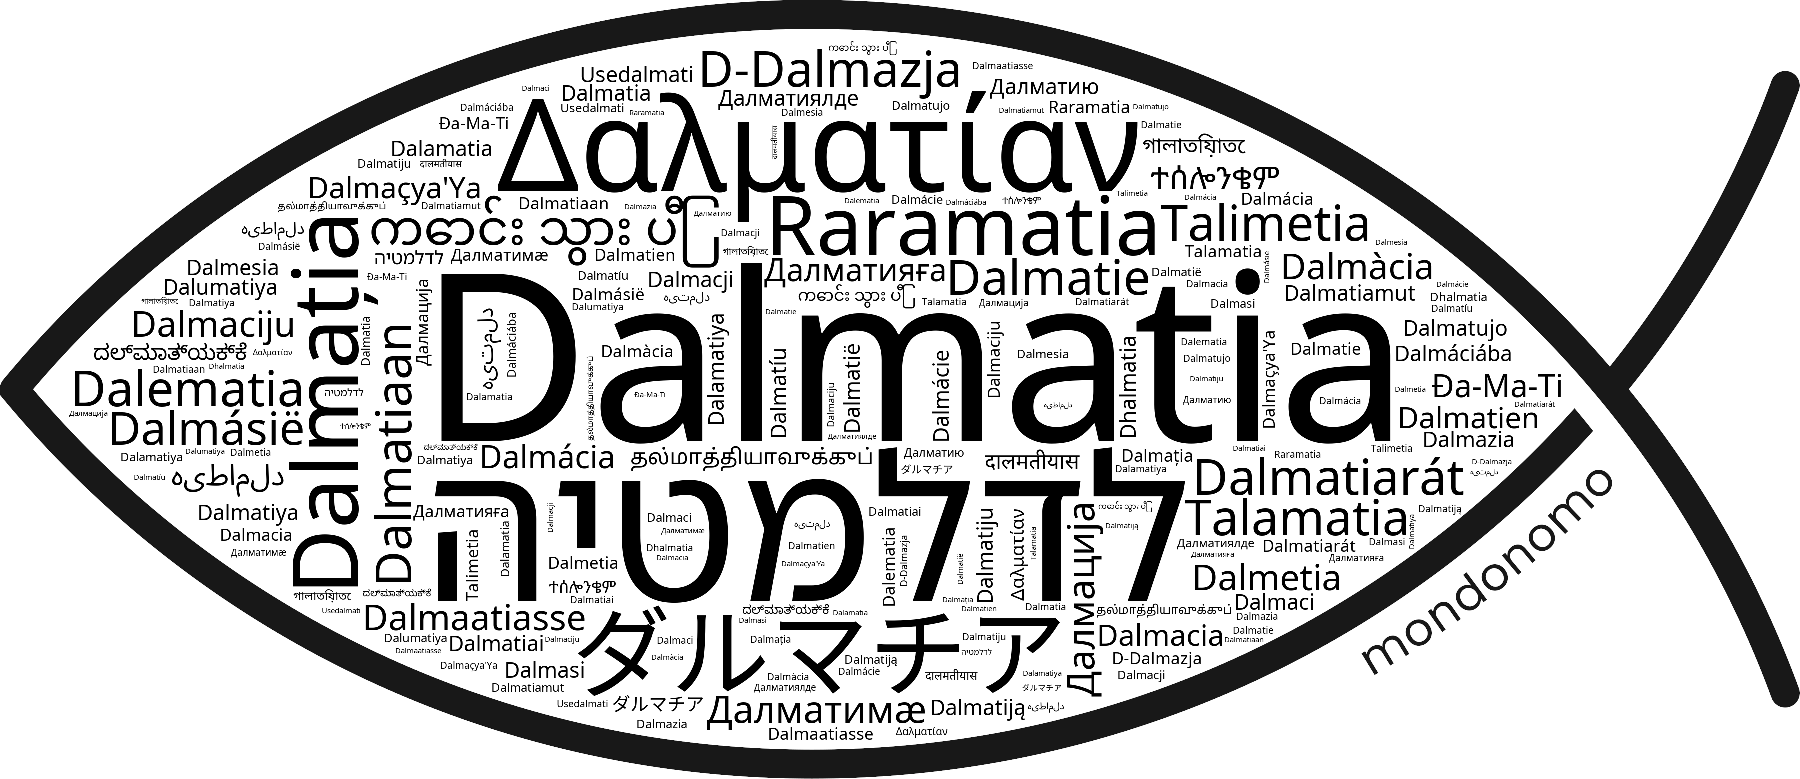 Name Dalmatia in the world's Bibles